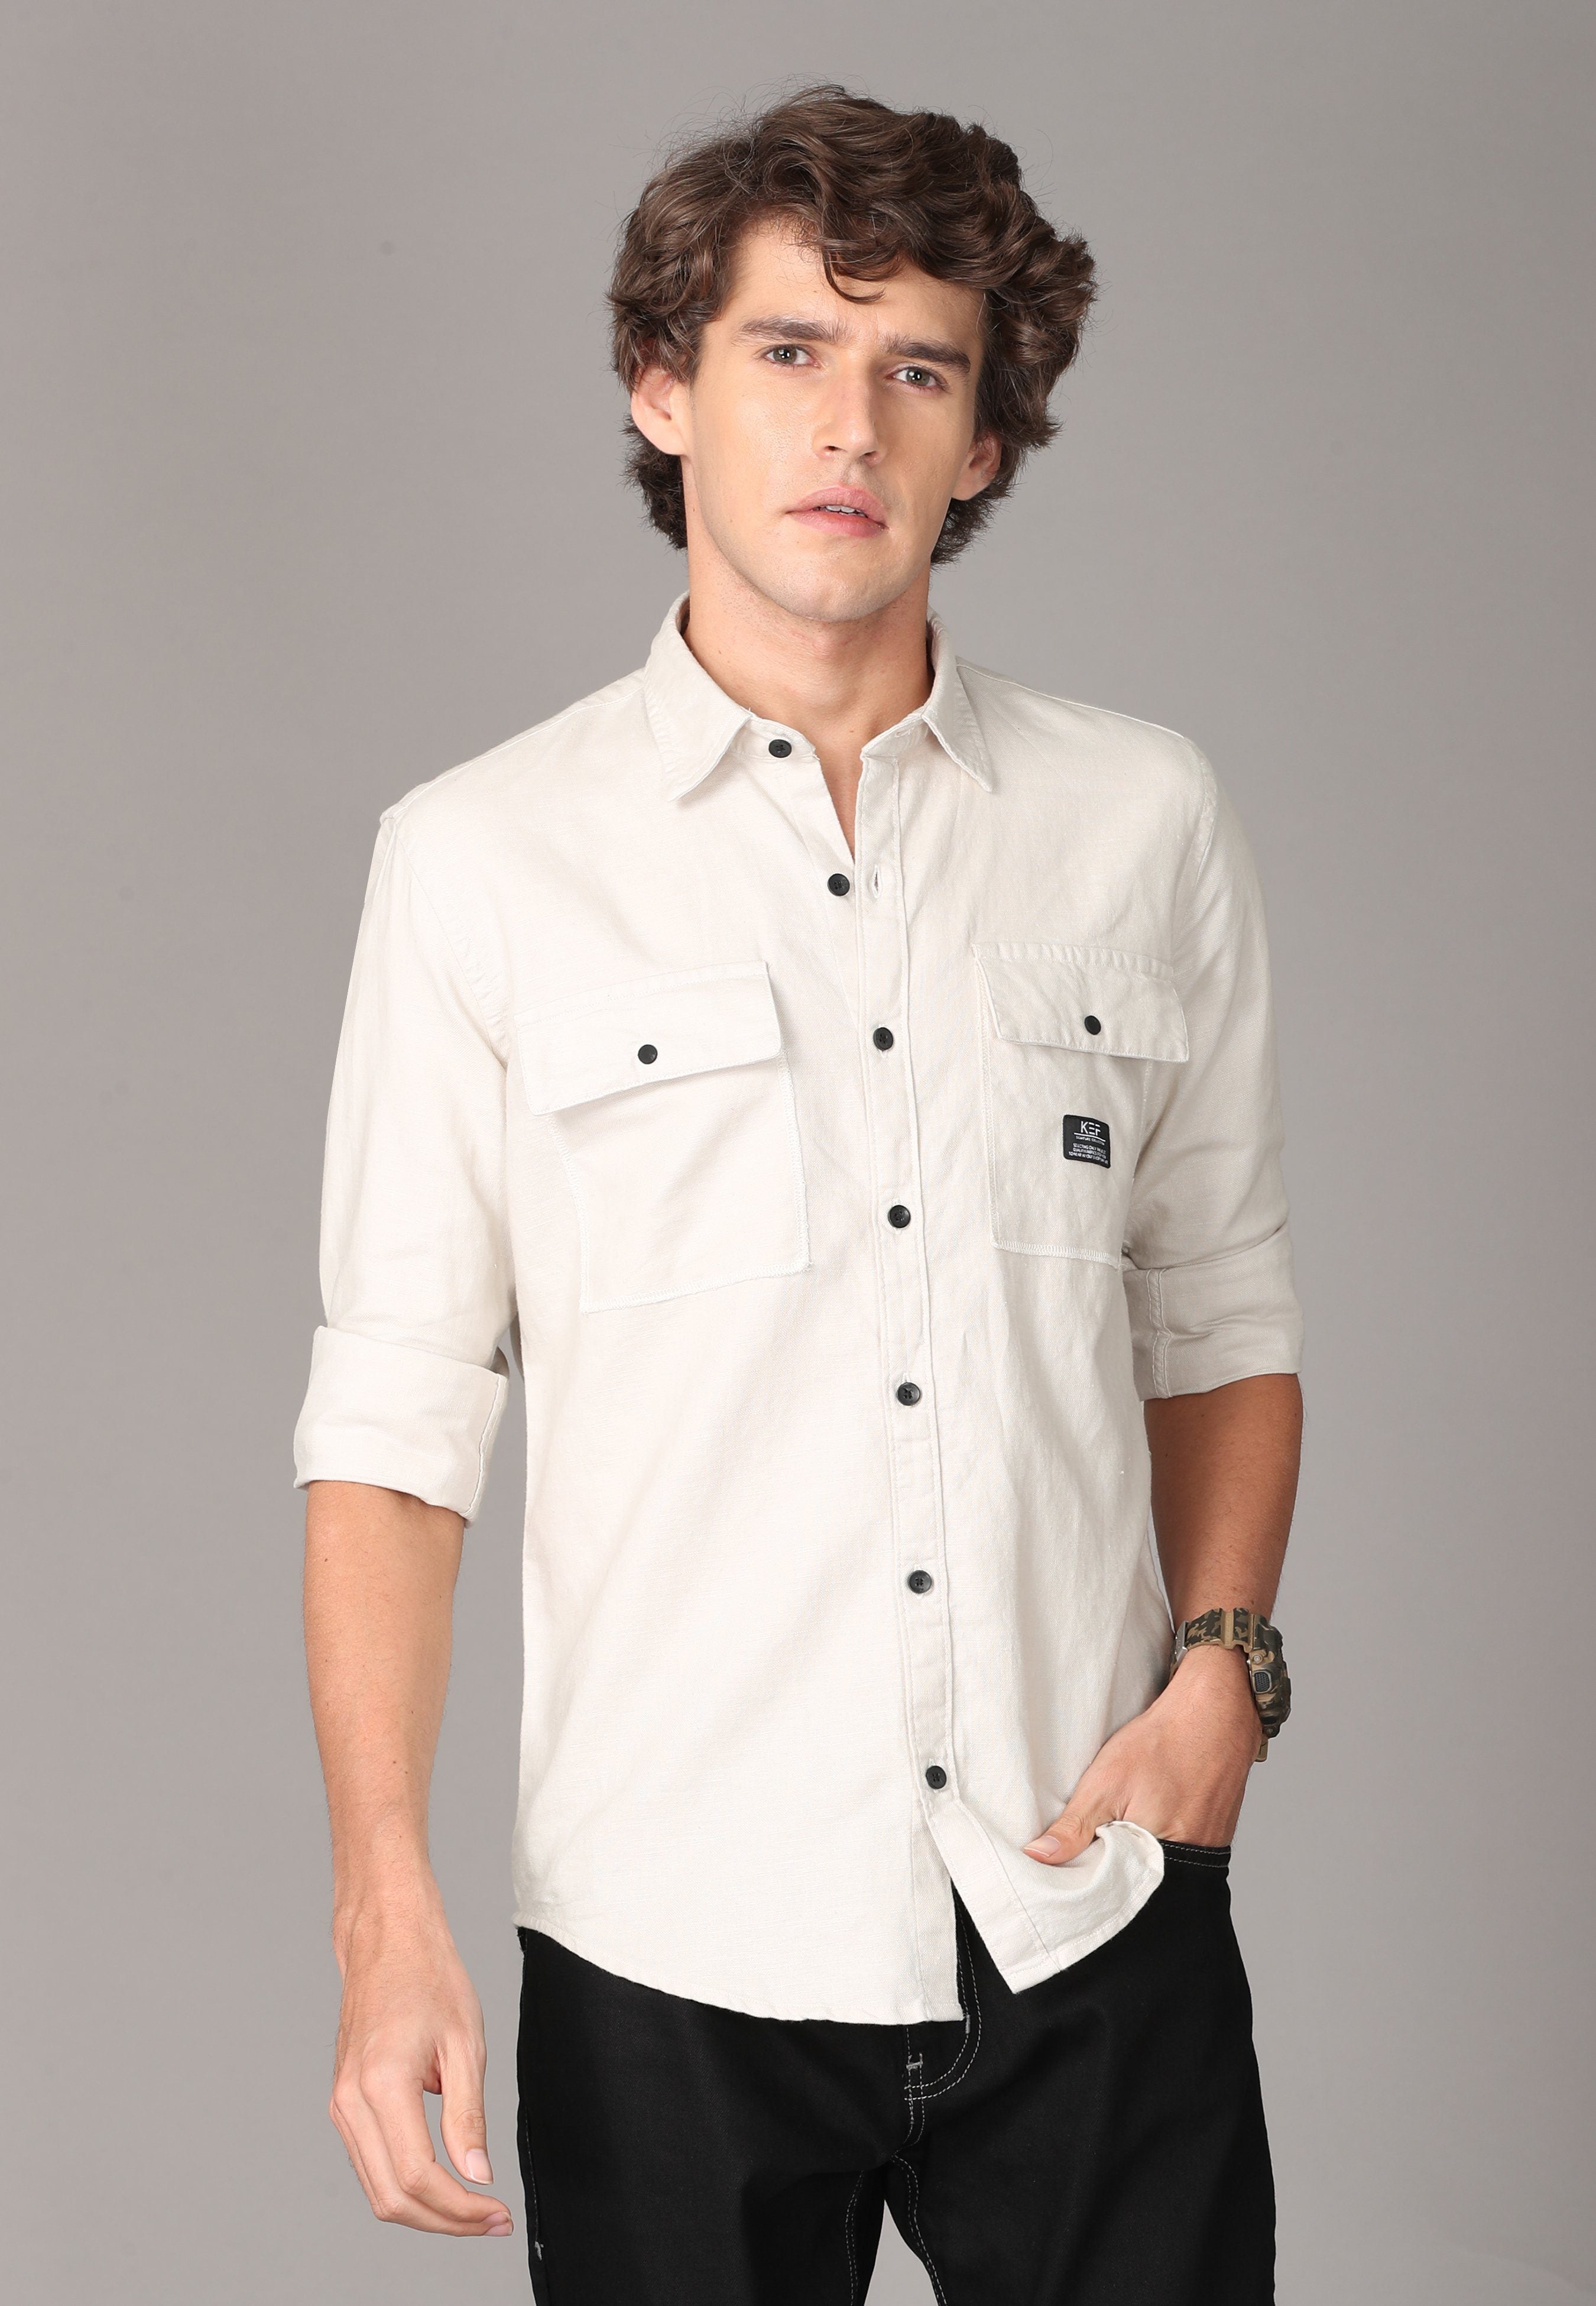 White Full Sleeve Shirt. Shirts KEF S 